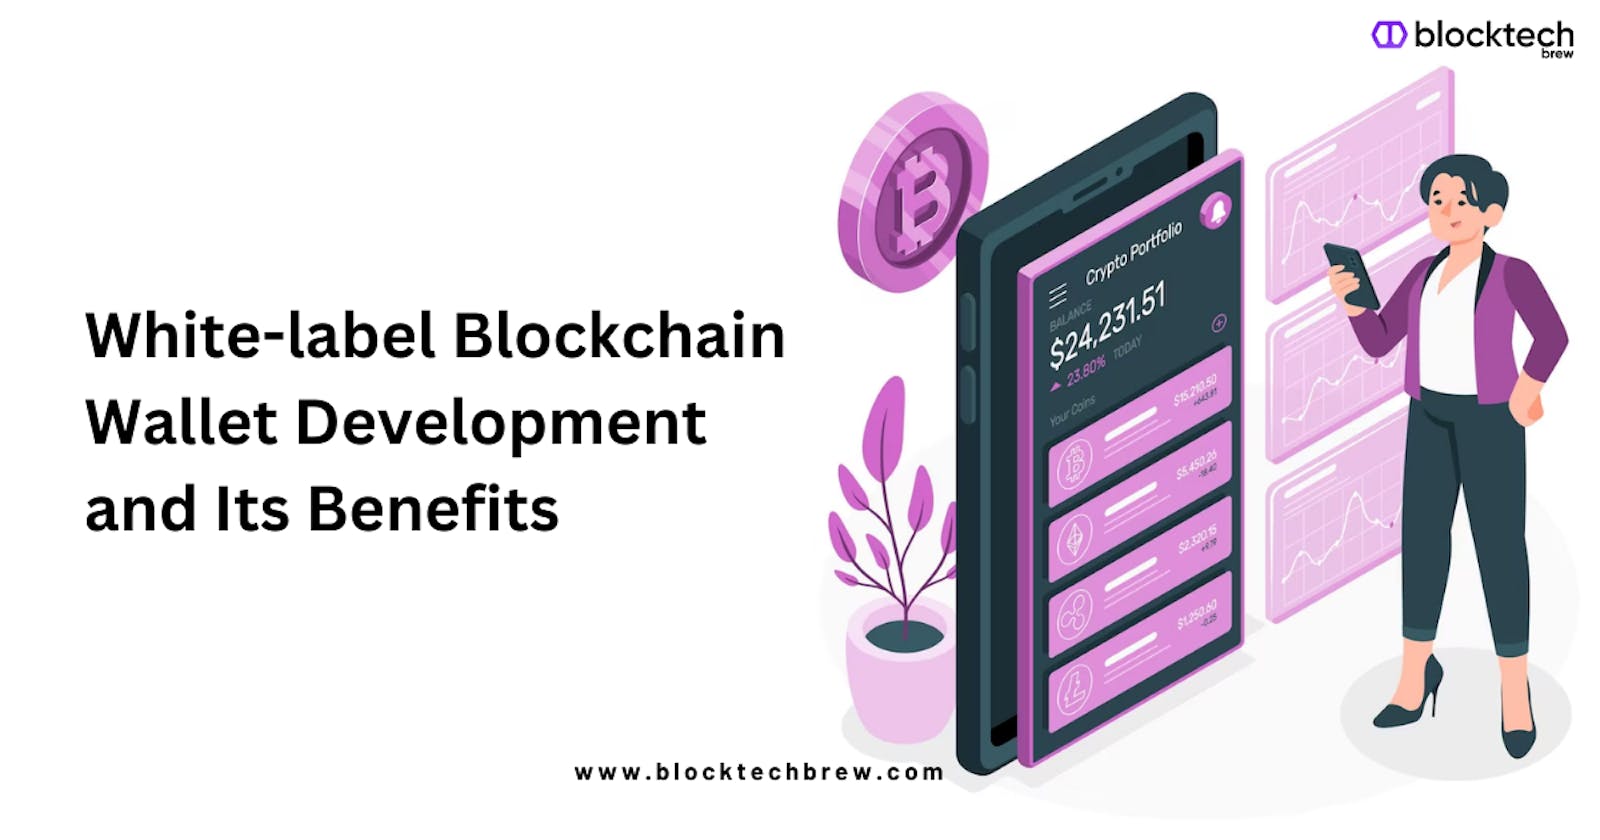 White-label Blockchain Wallet Development and Its Benefits